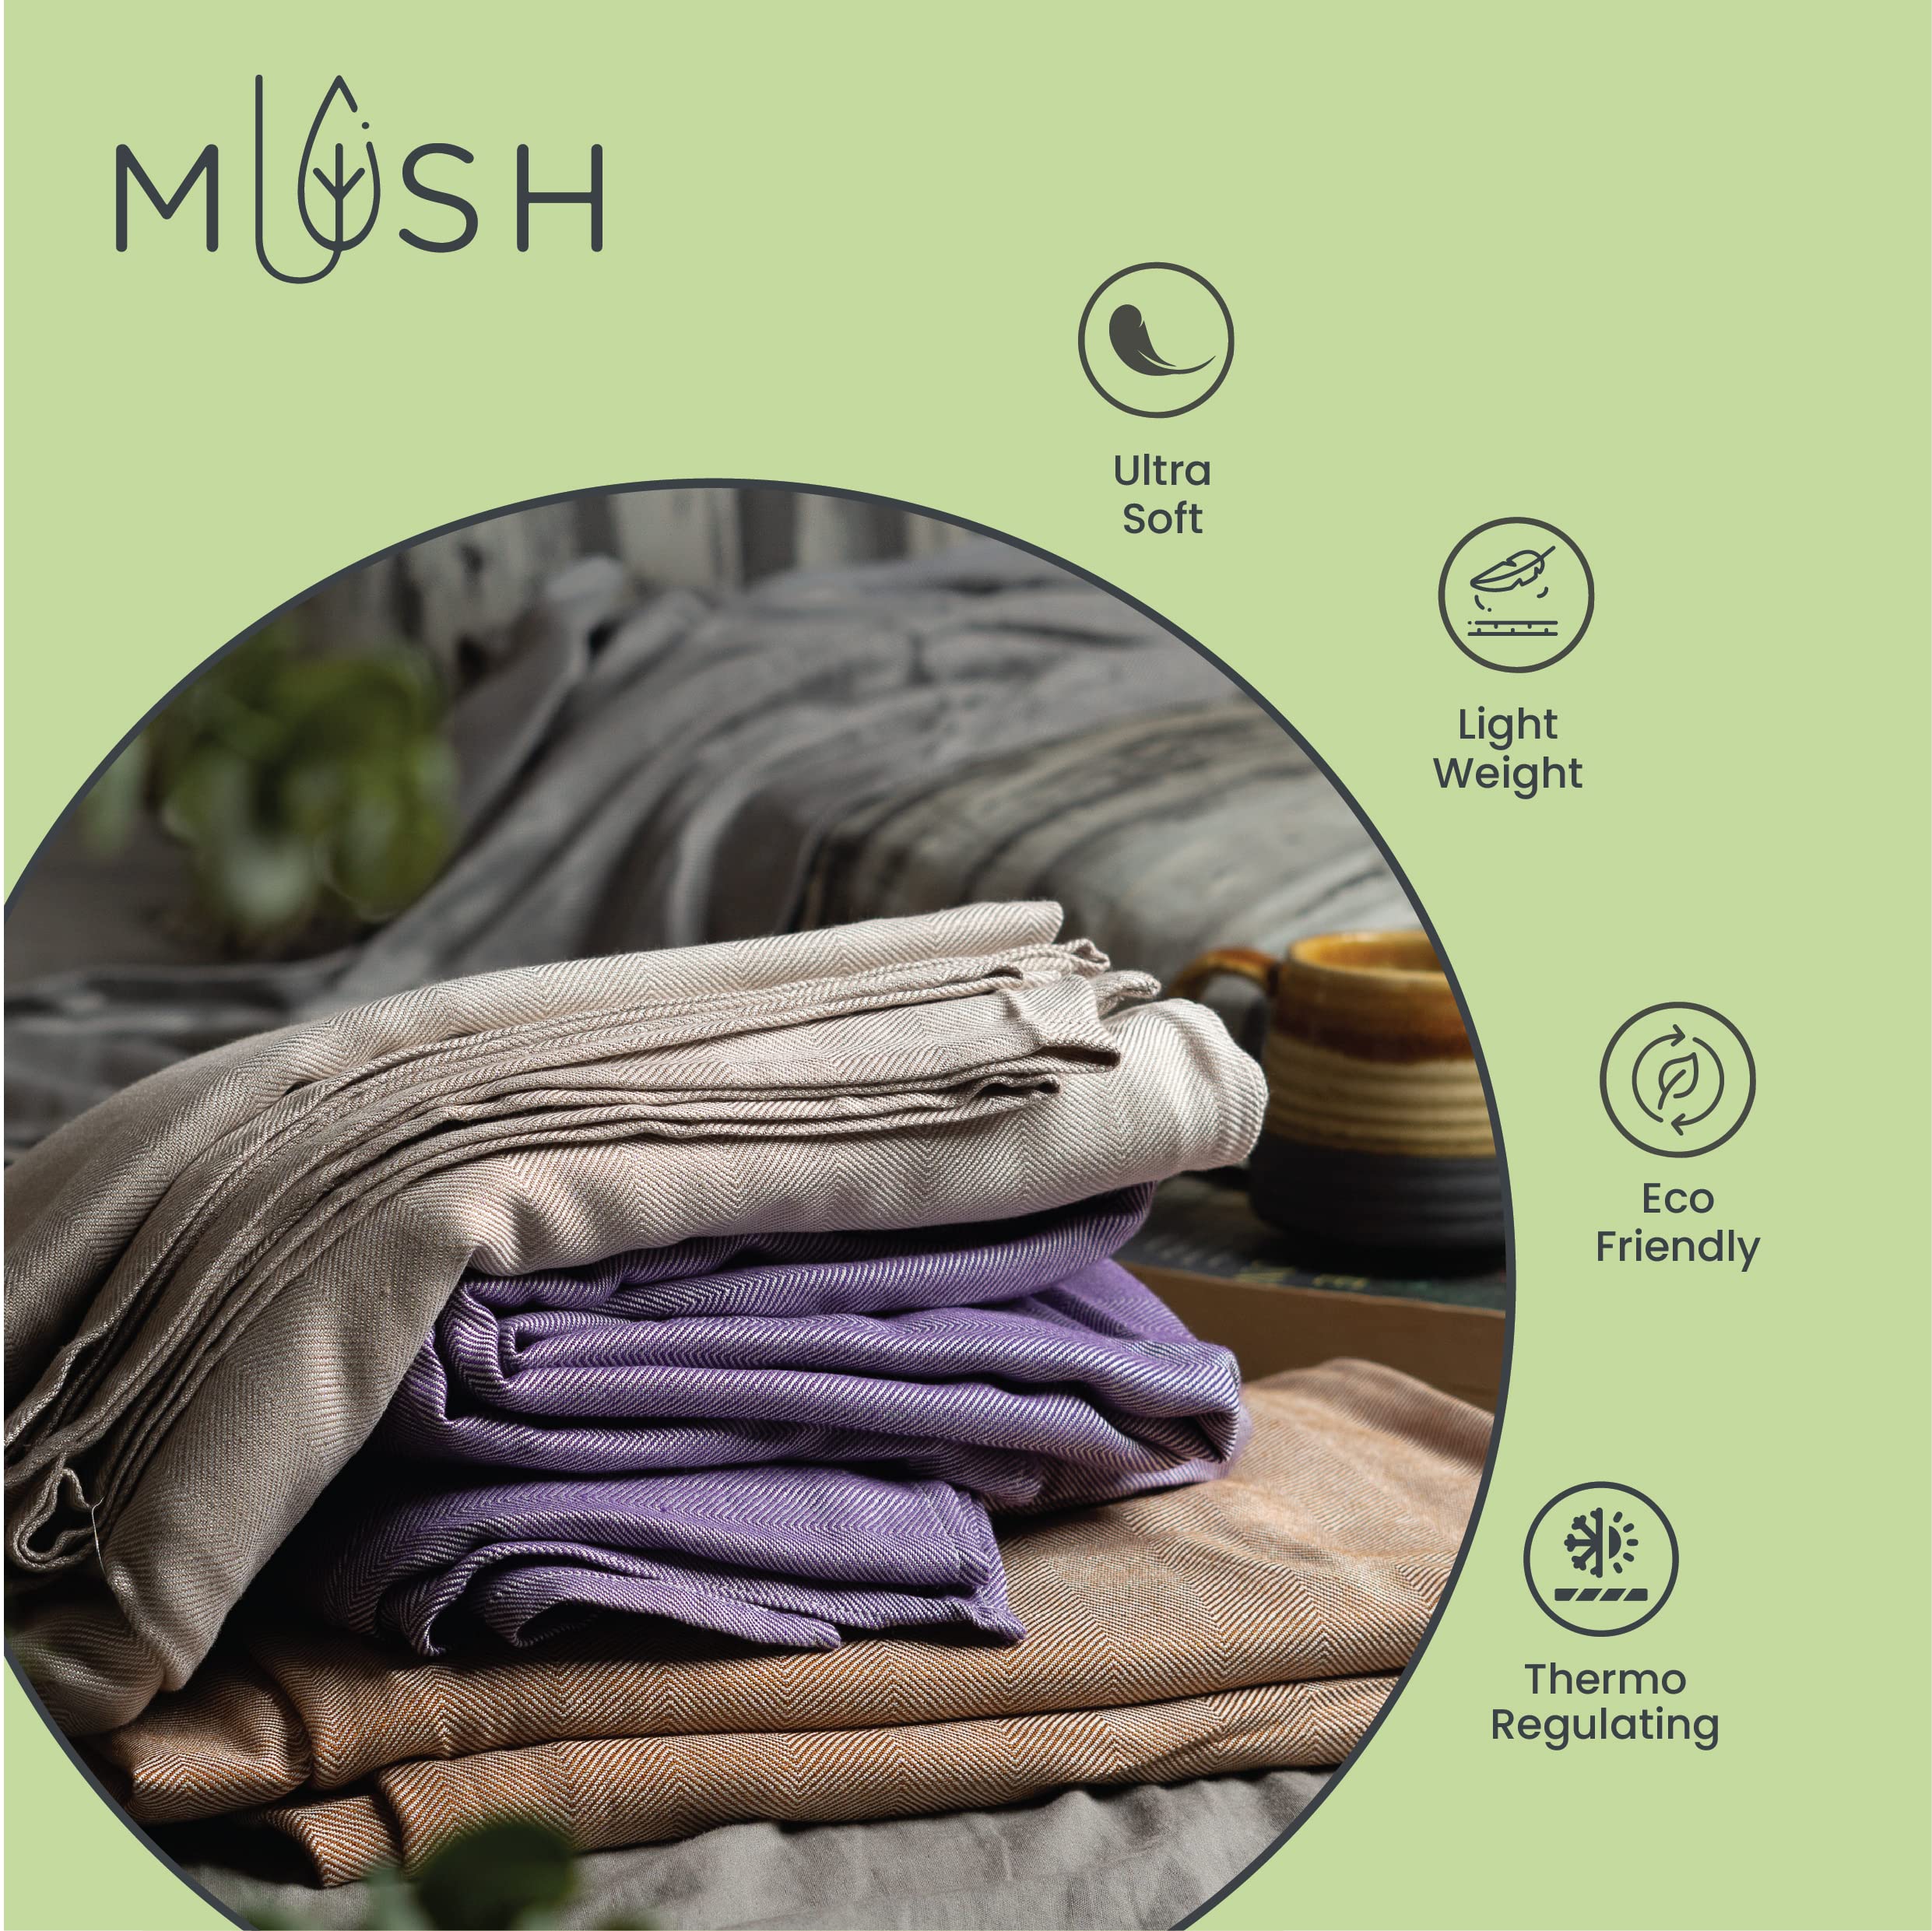 Mush Ultra-Soft, Light Weight & Thermoregulating, All Season 100% Bamboo Blanket & Dohar (Lavender, Large - 5 X 7.5 Ft), Lightweight